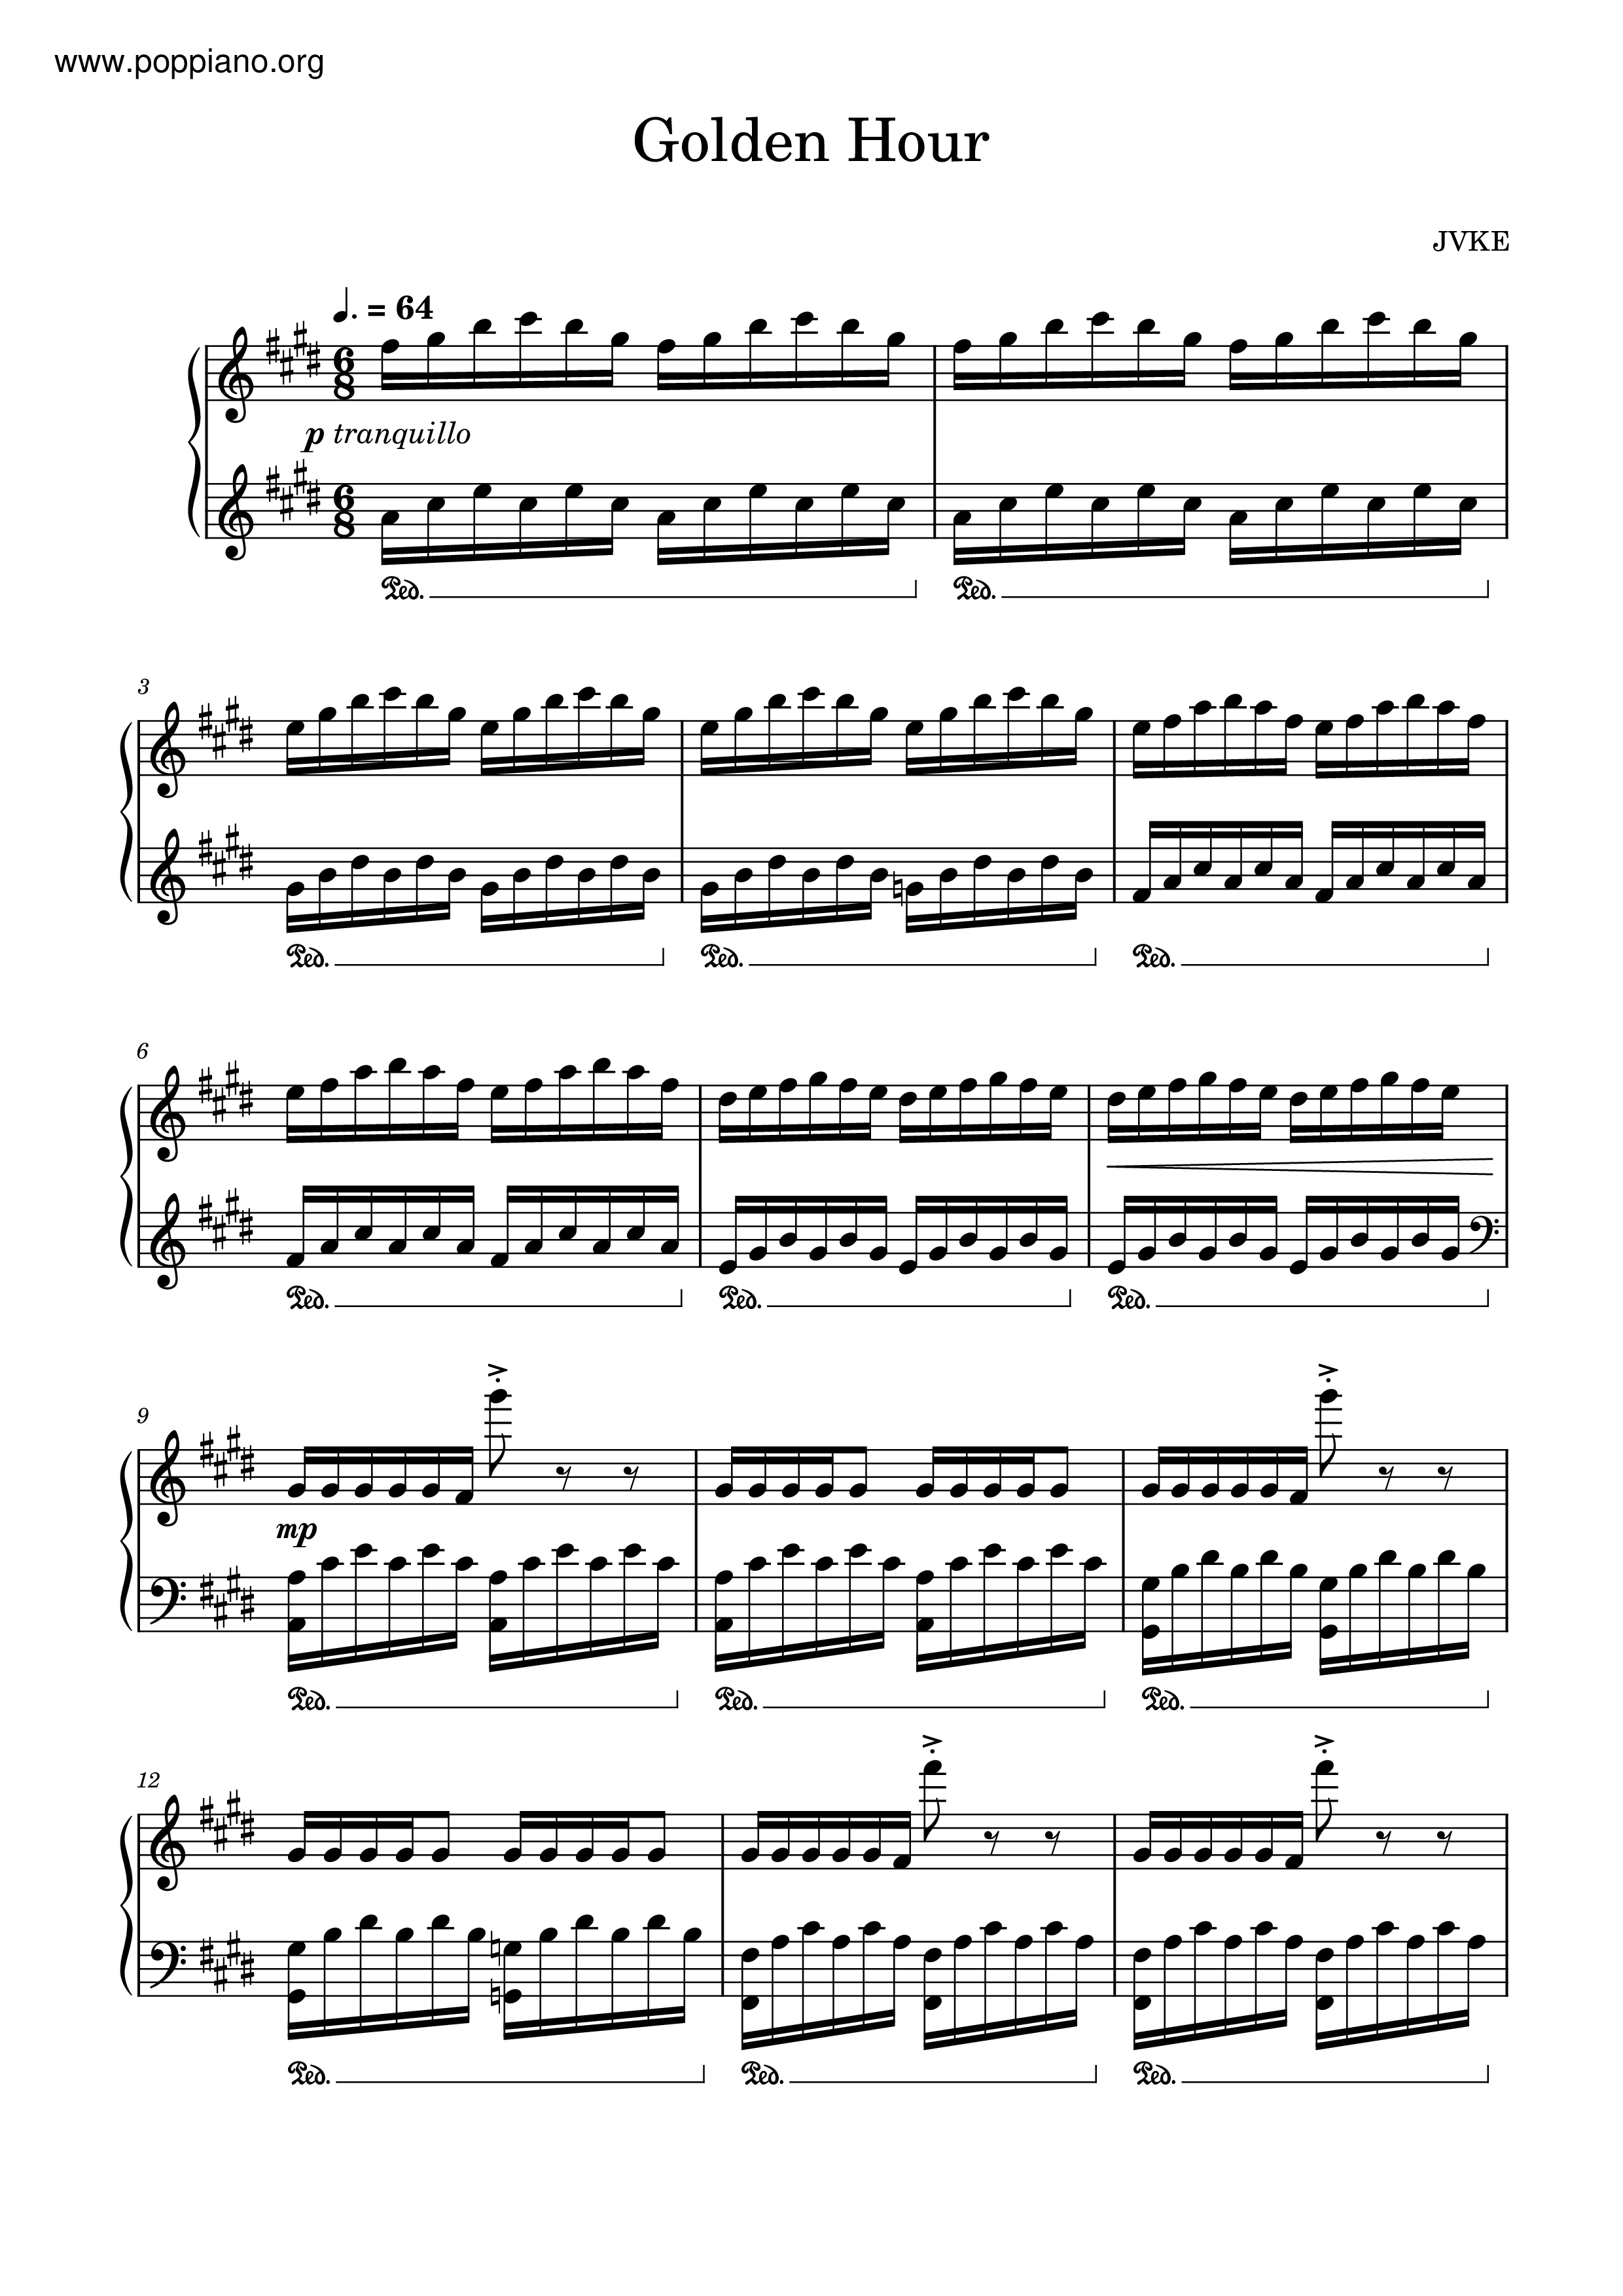 golden hour - Sheet Music / Piano Score Free PDF Download - HK Pop